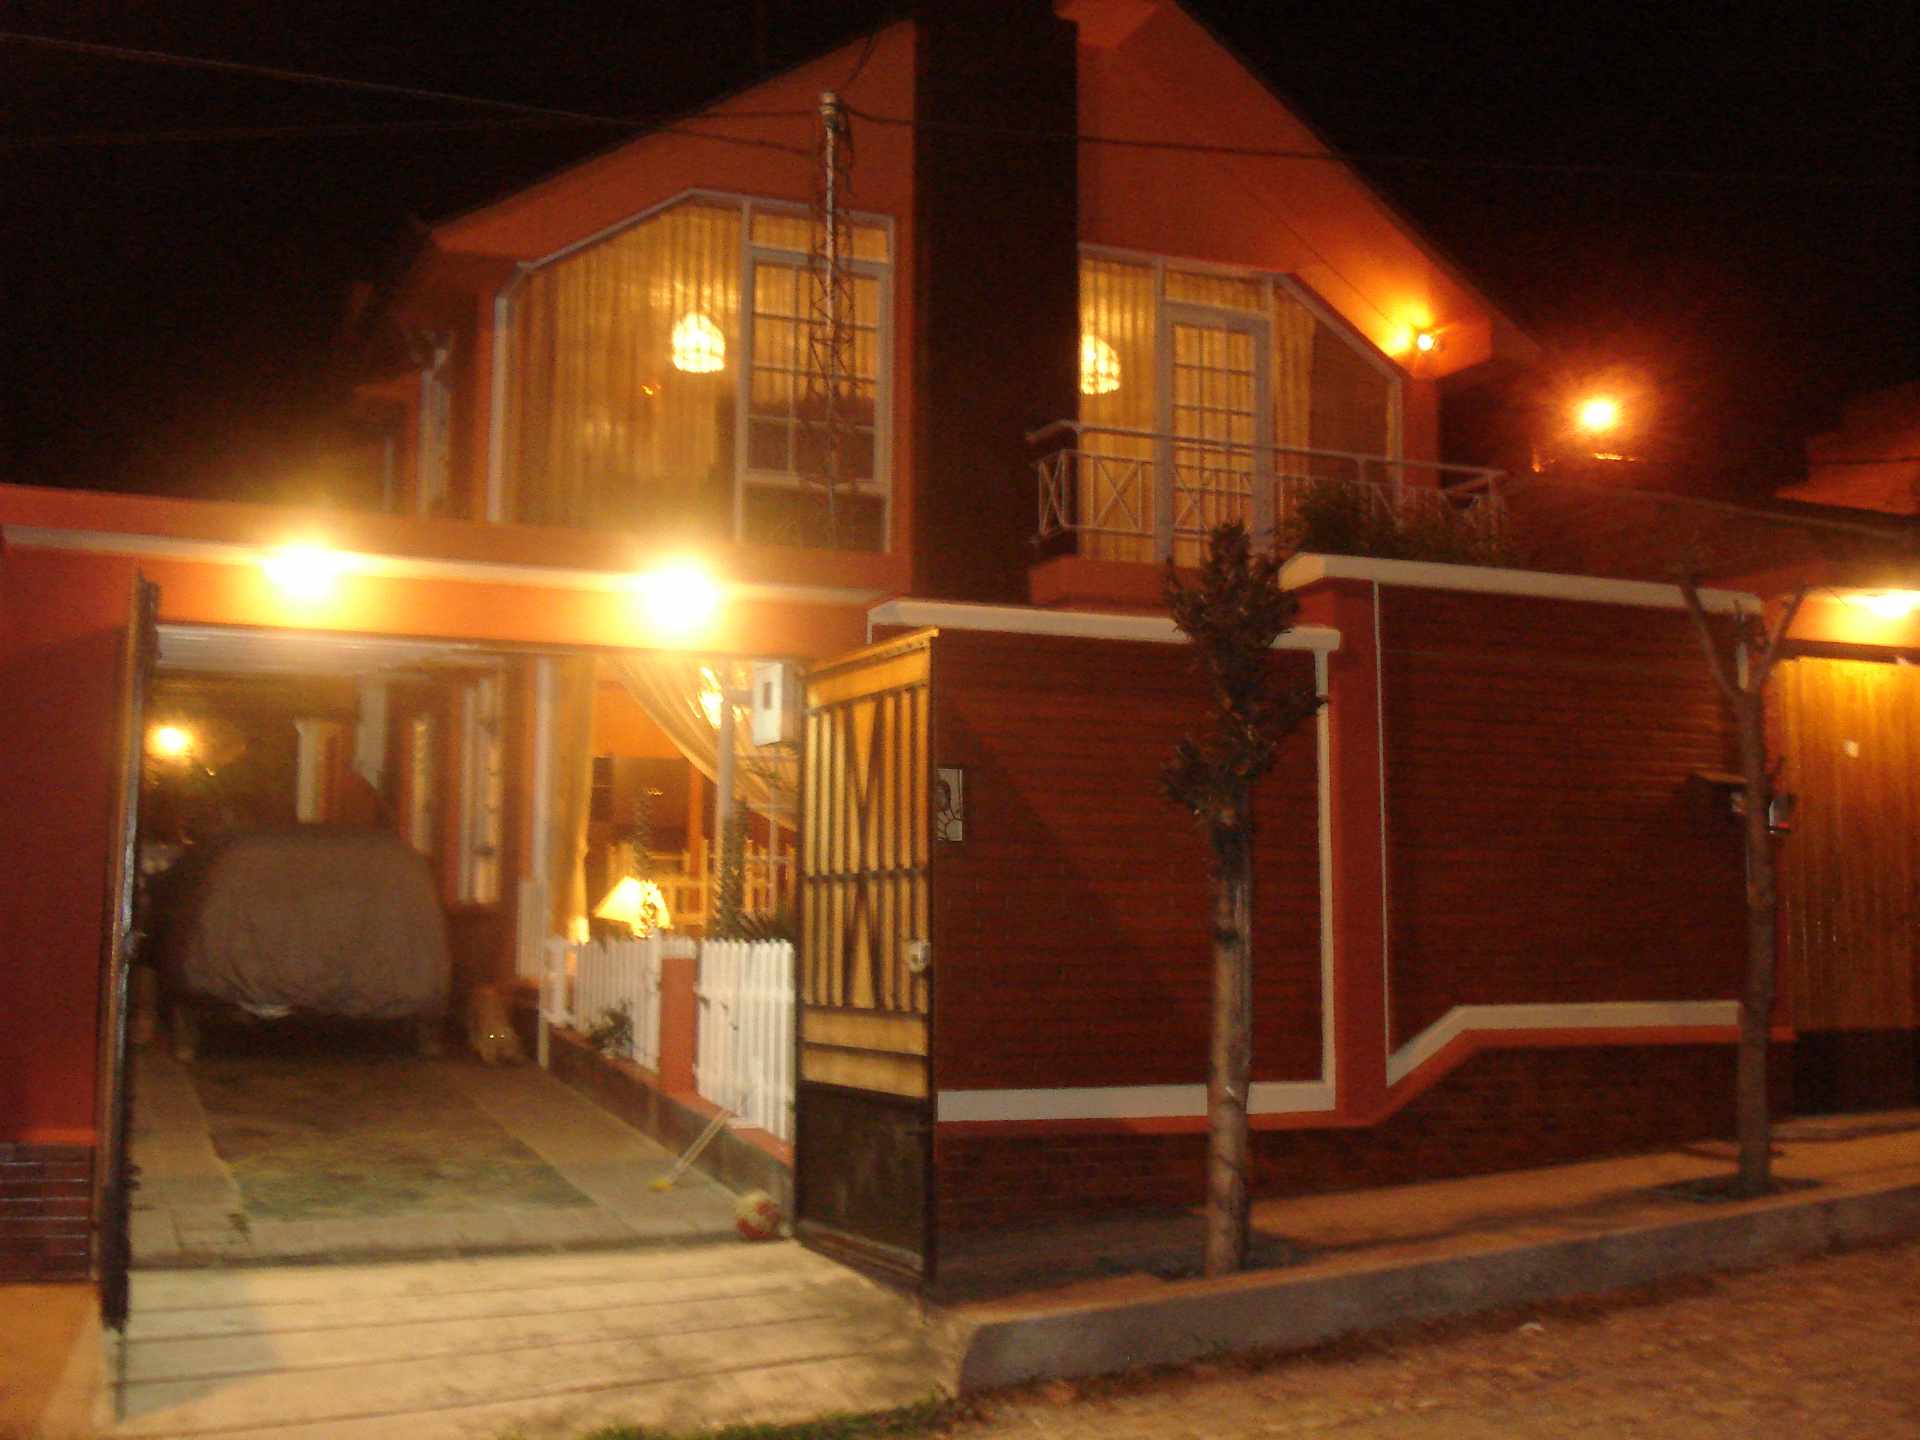 Casa  Villa Carmen Rosa N° 23 final primera meseta, Alto Seguencoma Foto 1